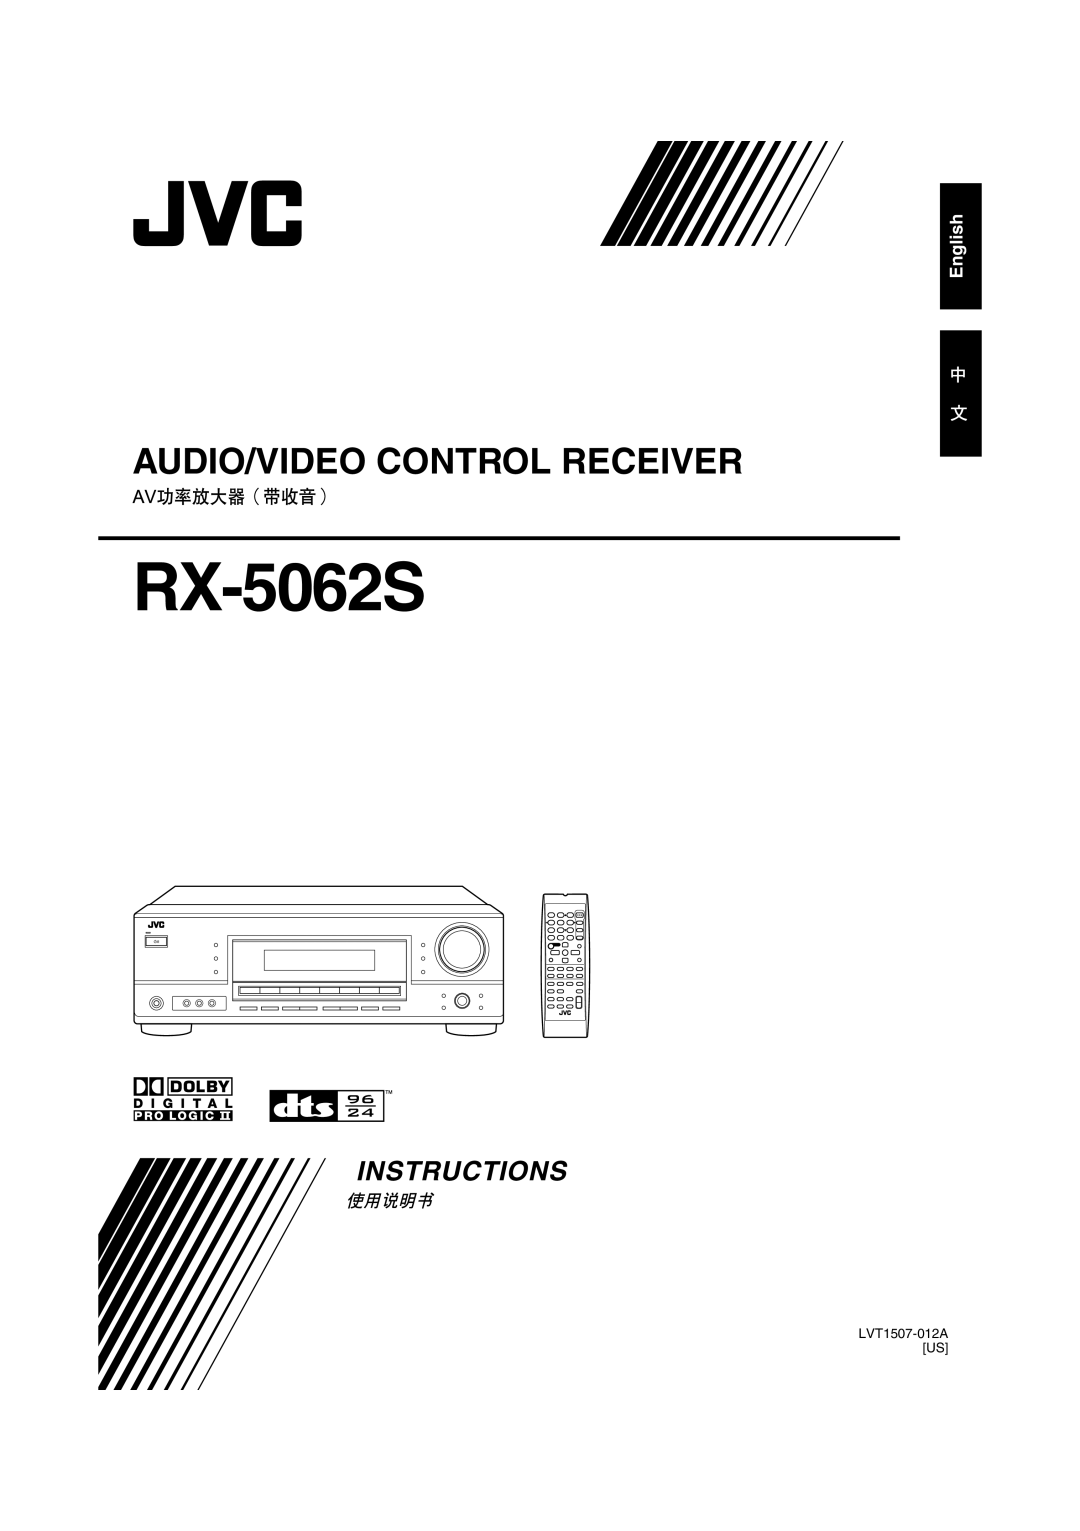 JVC LVT1507-012A manual English, RX-5062S, Audio/Video Control Receiver, Instructions, Ta/News/Info Display Mode 